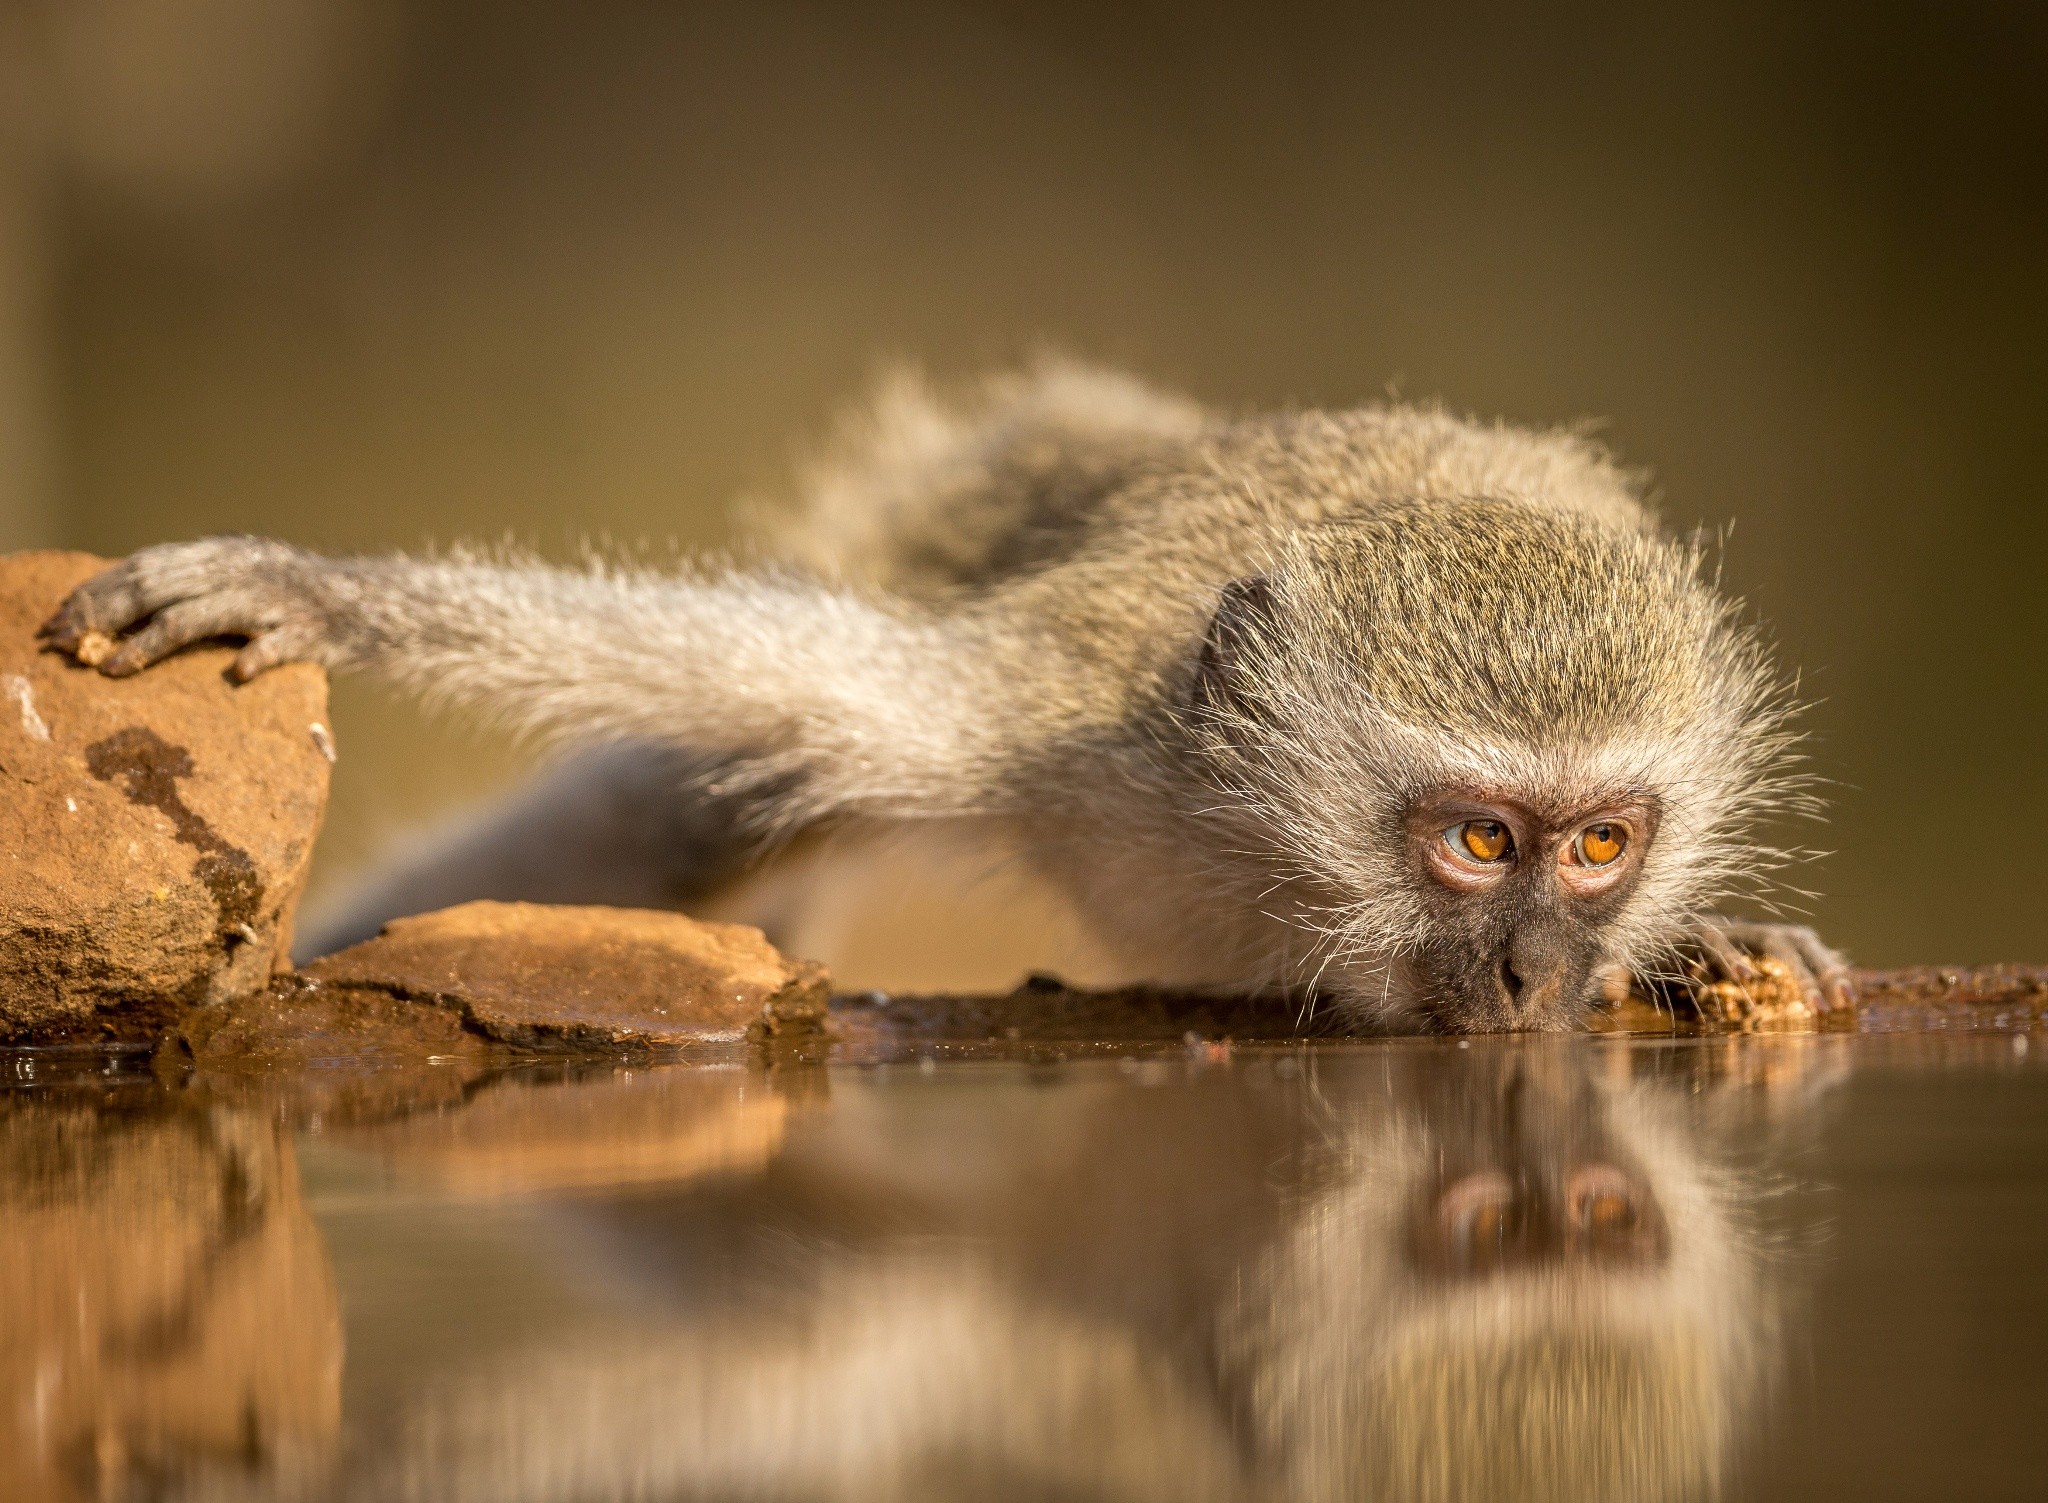 General 2048x1503 animals monkey water reflection brown mammals outdoors drinking